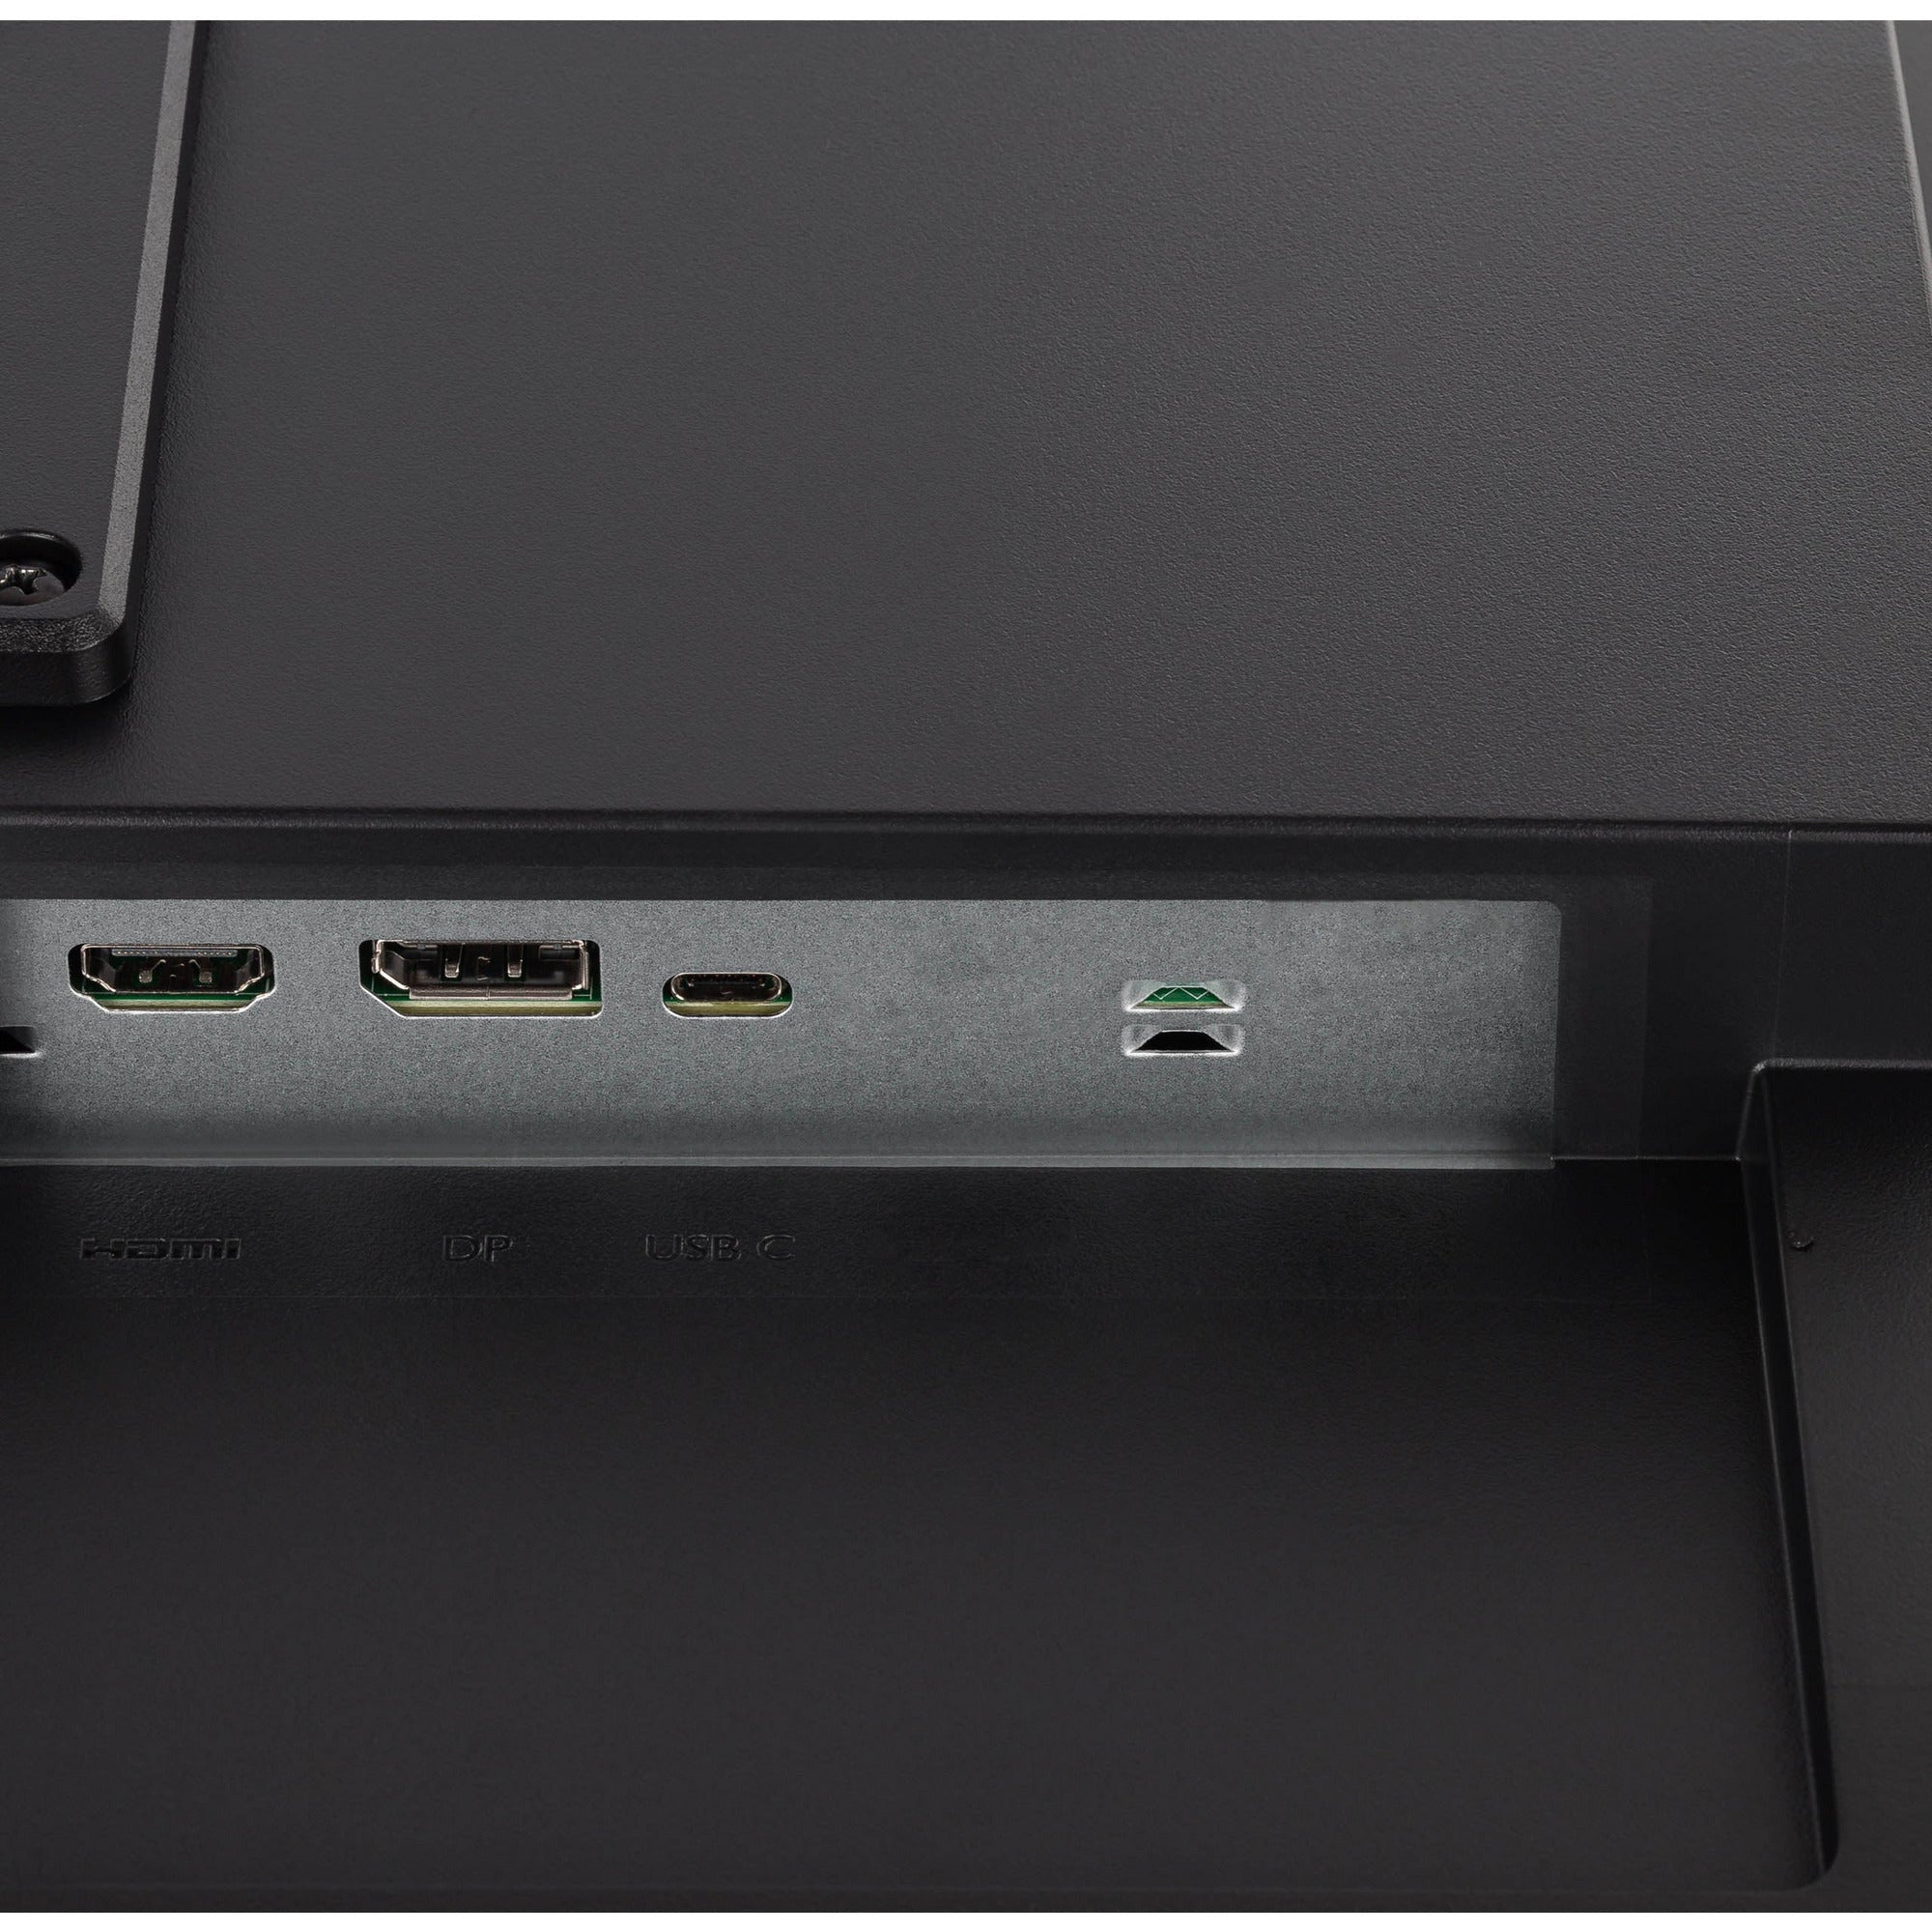 iiyama Prolite XUB2792QSC-B5 27’’ WQHD 2560x1440 IPS Display with USB-C dock and 65W Power Delivery